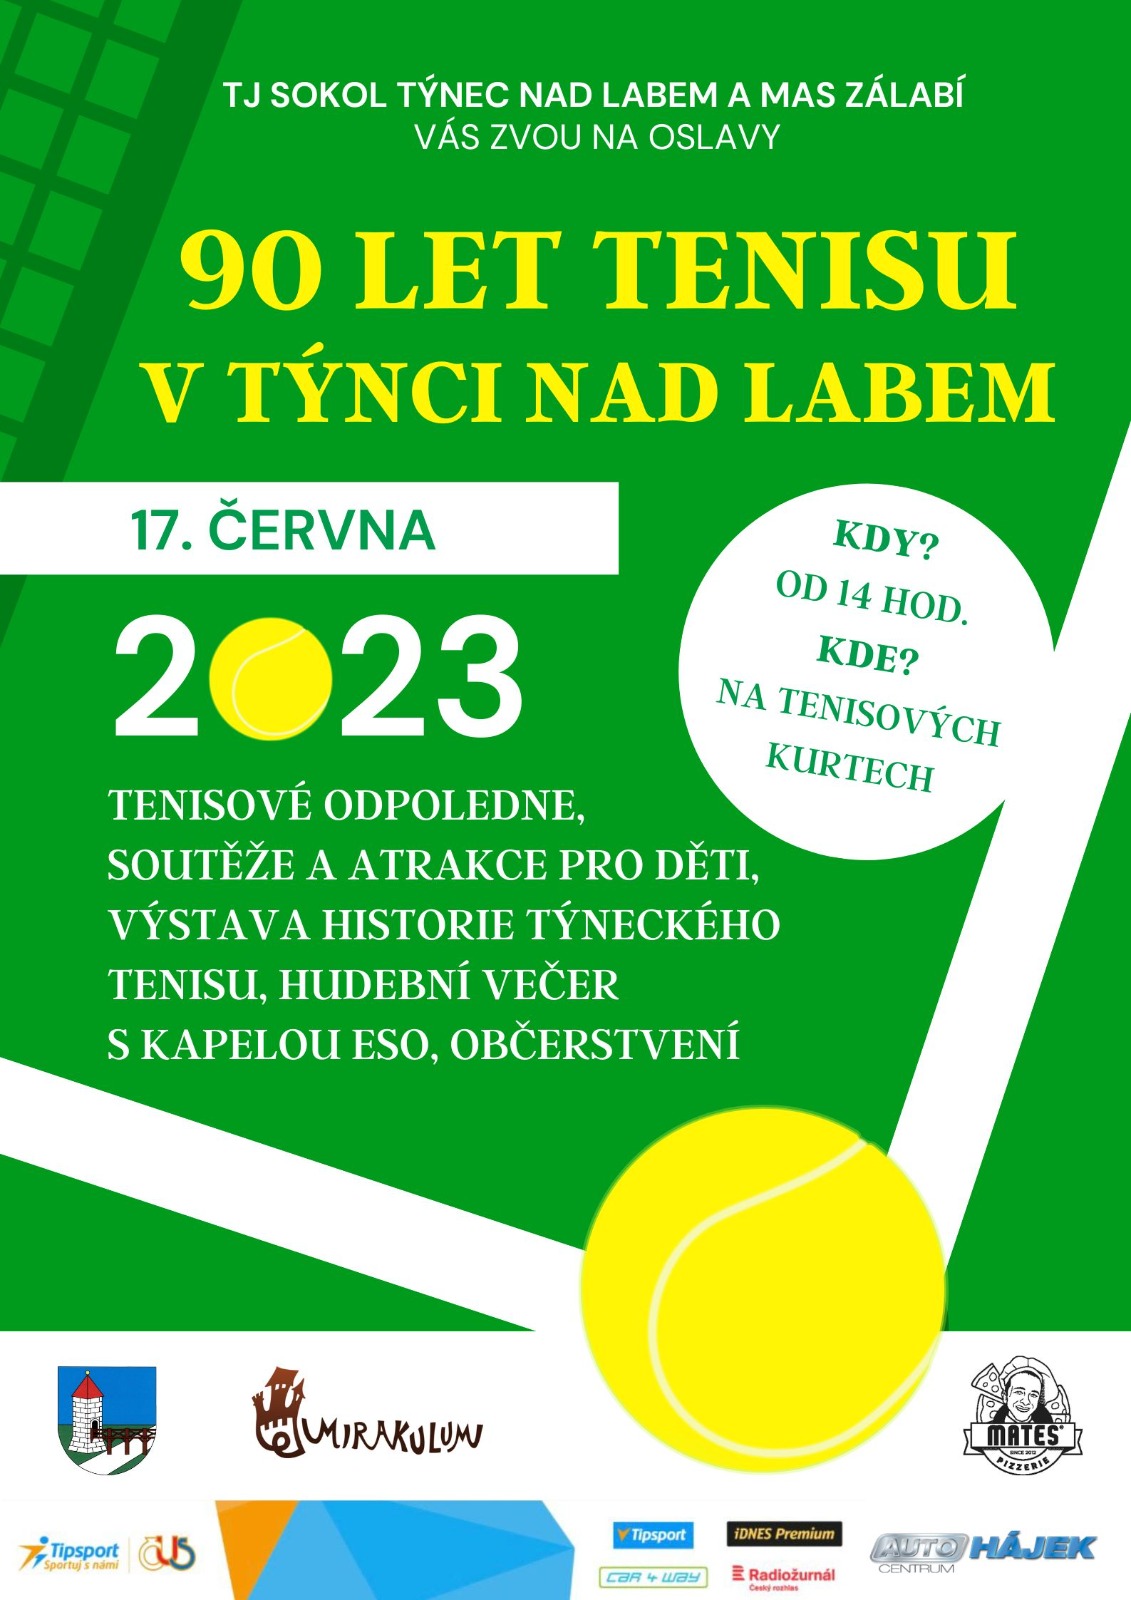 Oslavy 90 let tenisu